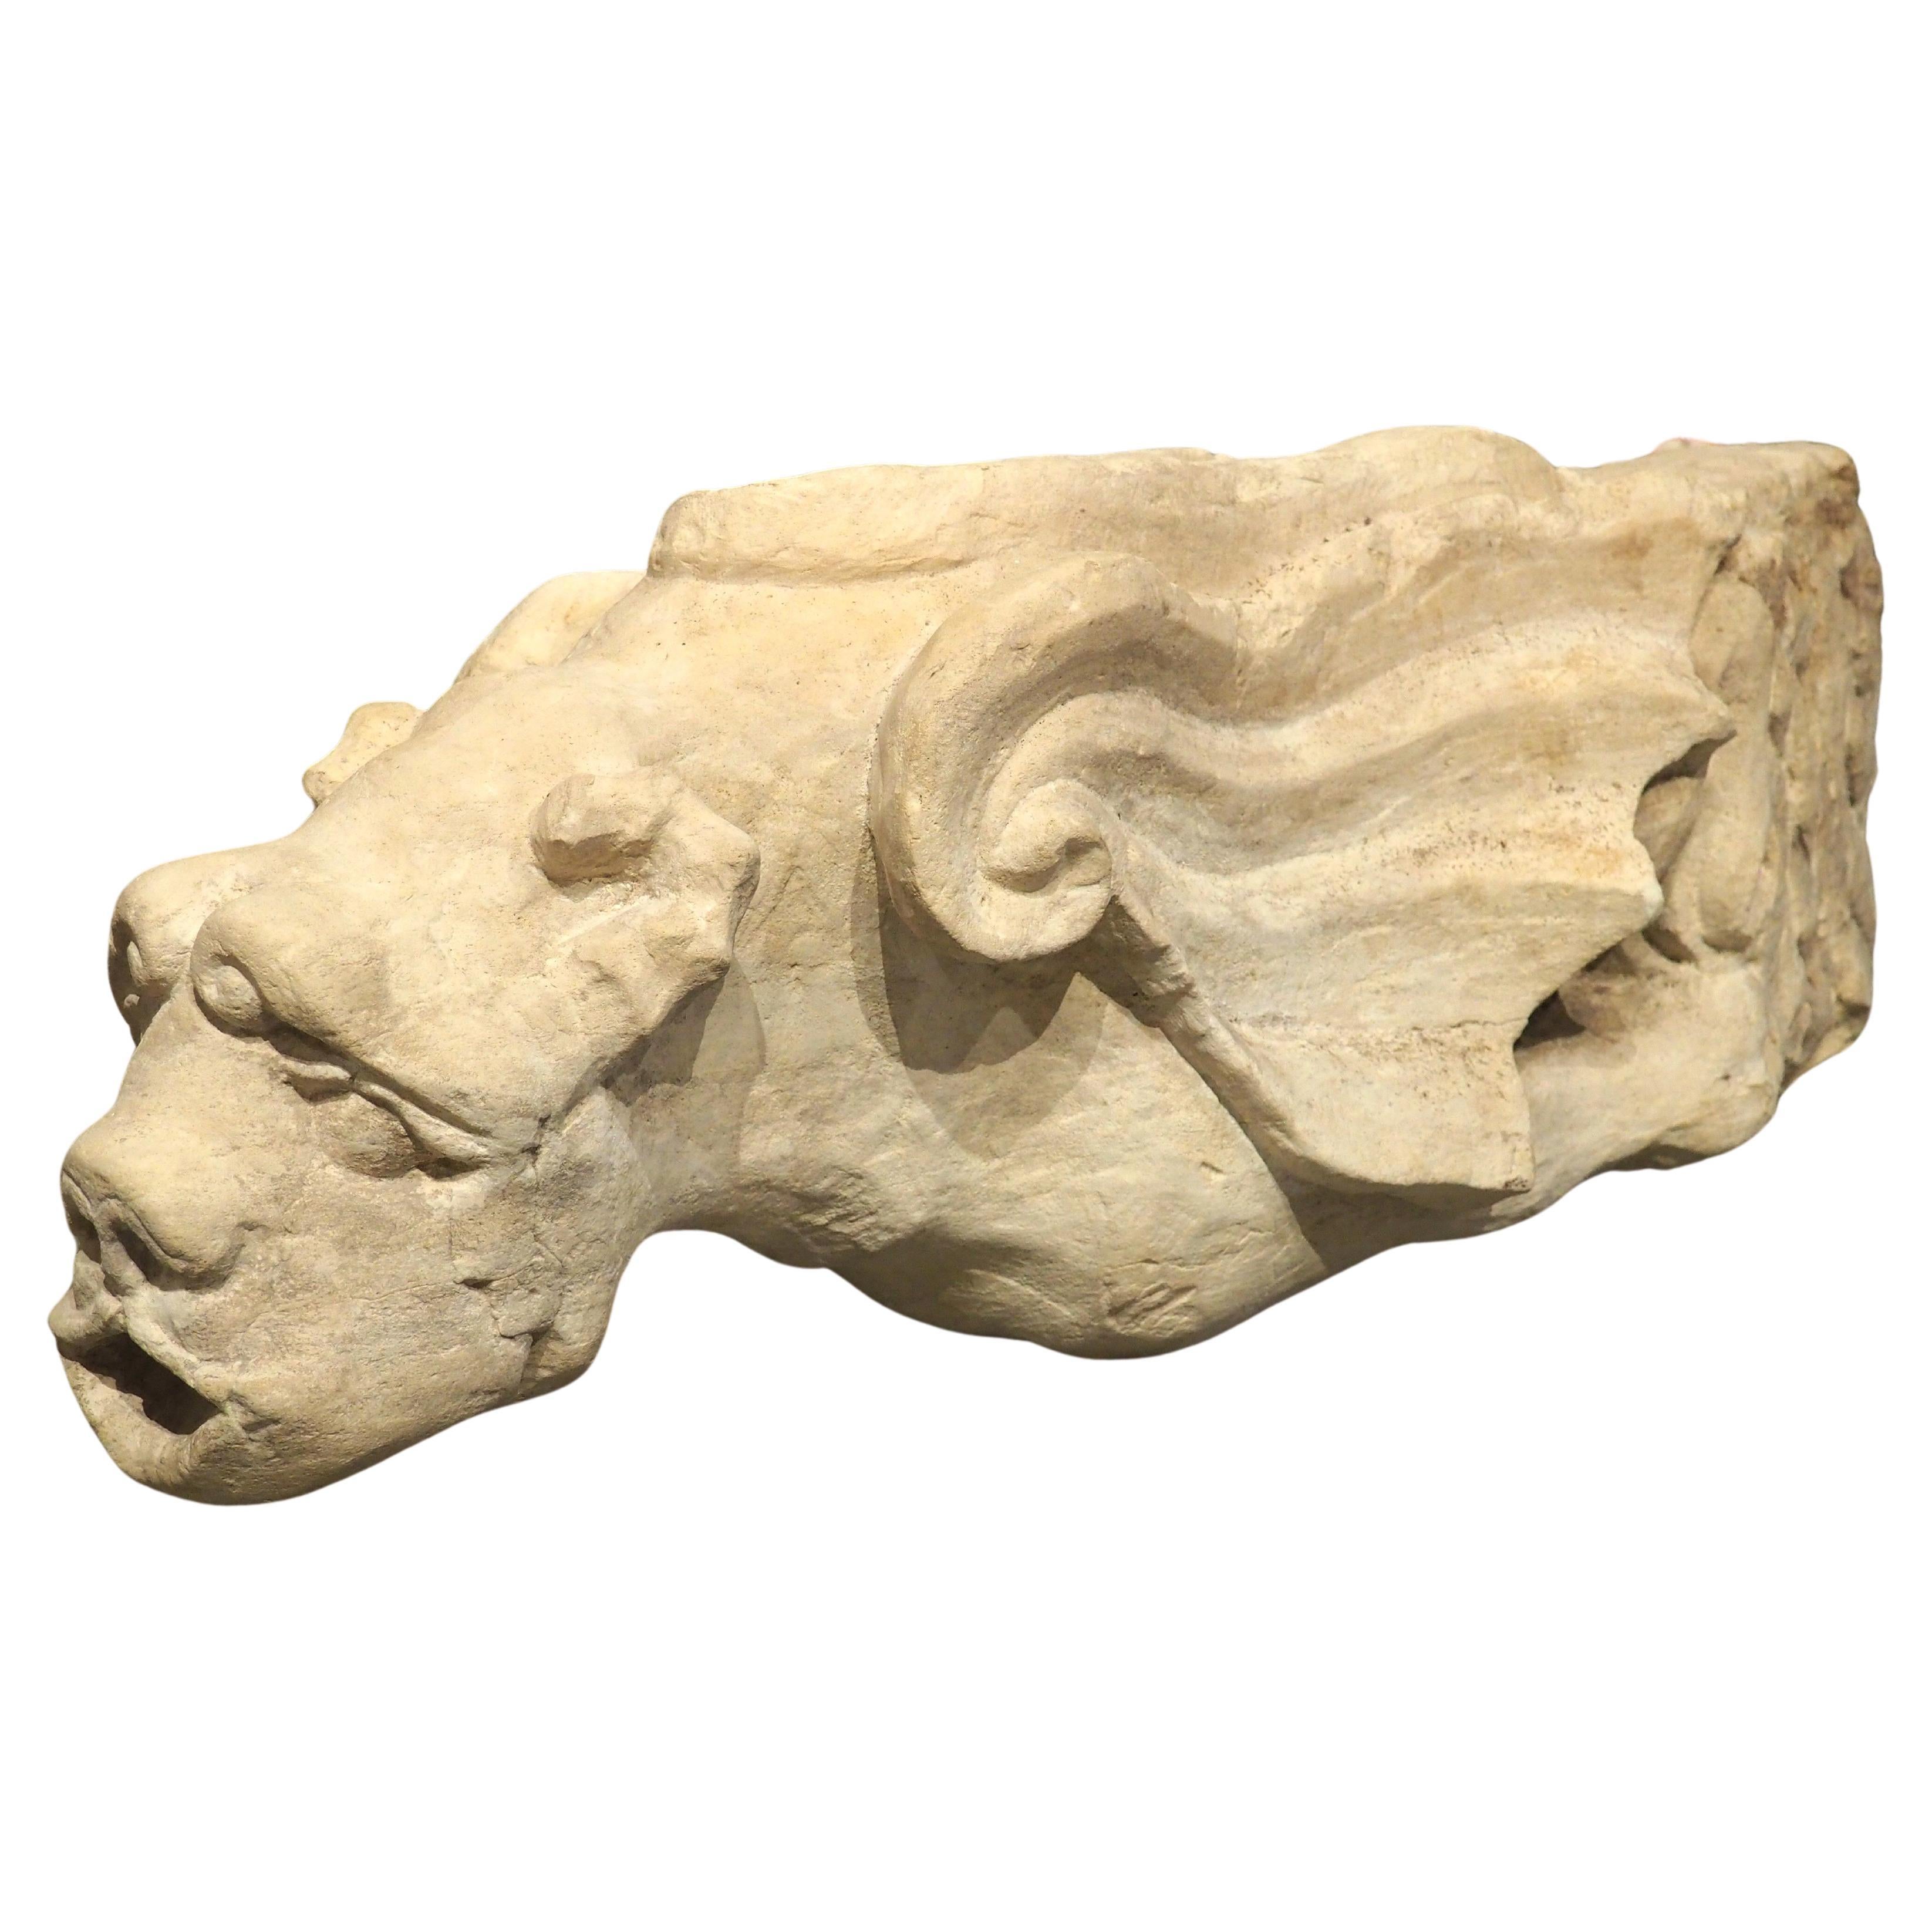 Rare Antique French Carved Limestone Gargoyle Scupper, Pre-1700